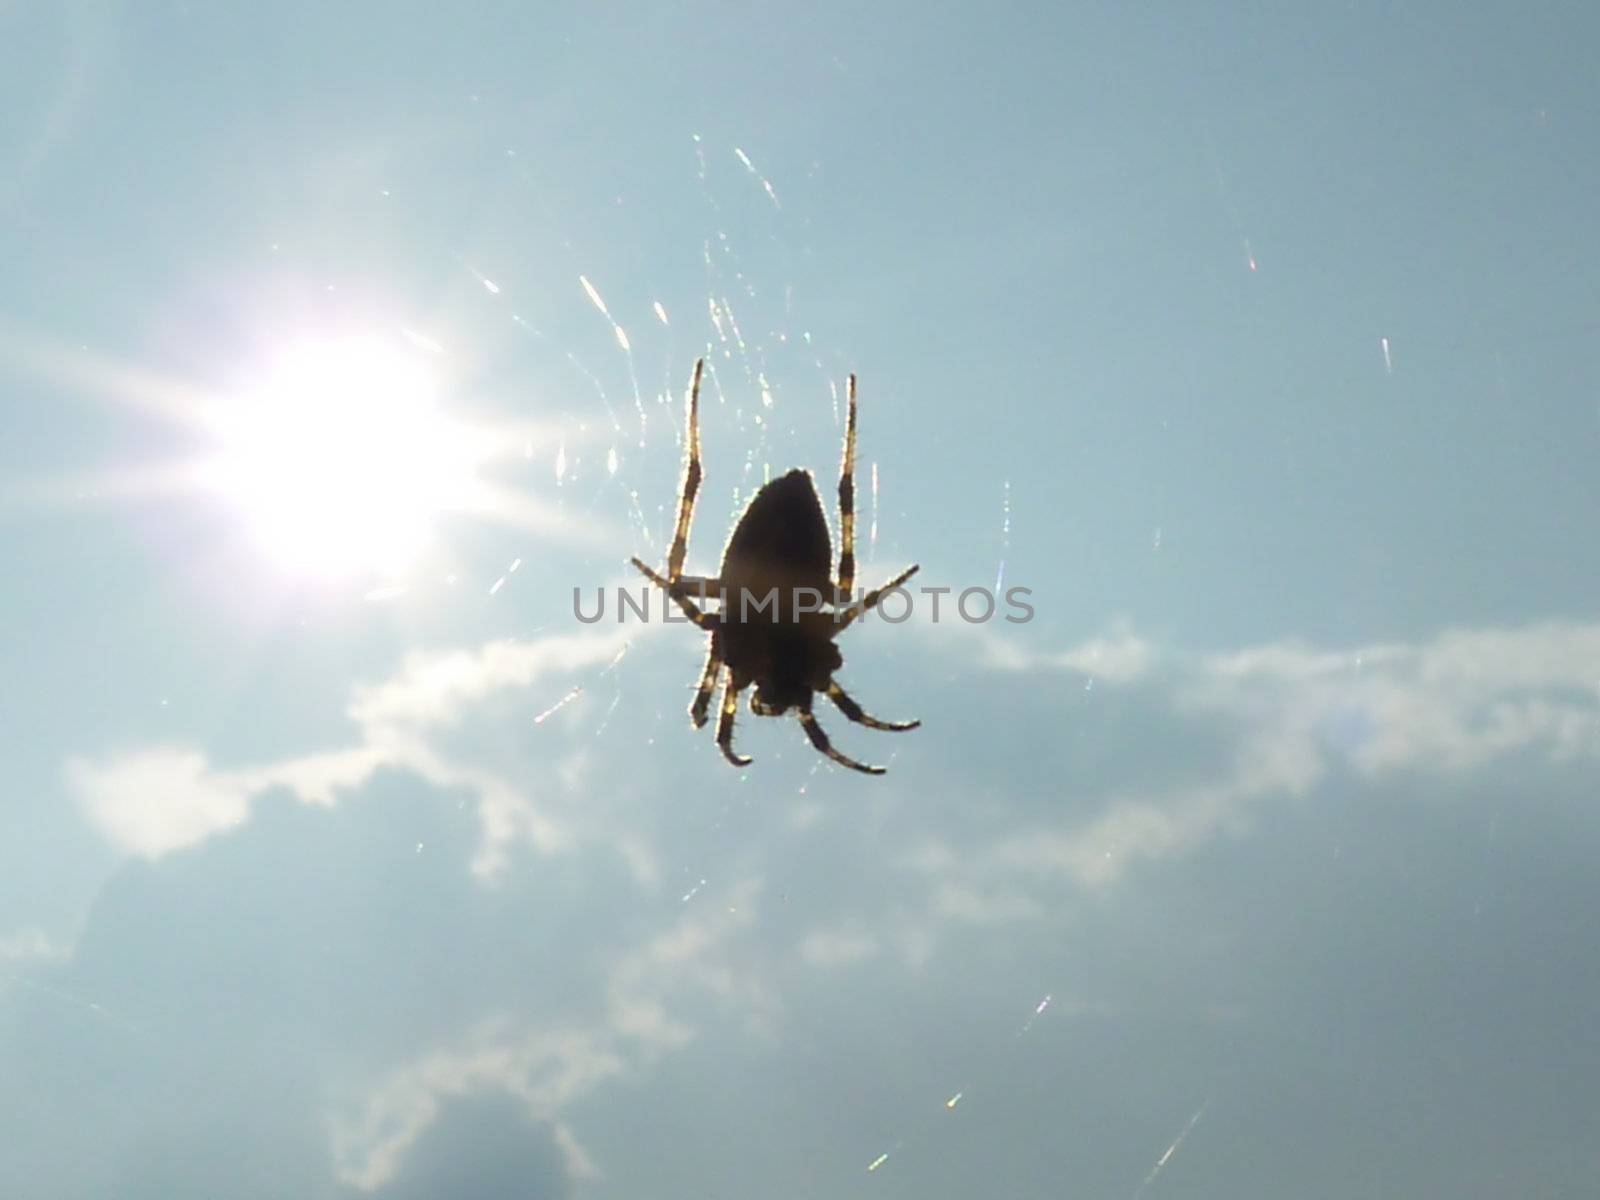 Spider on cobweb by Elenaphotos21